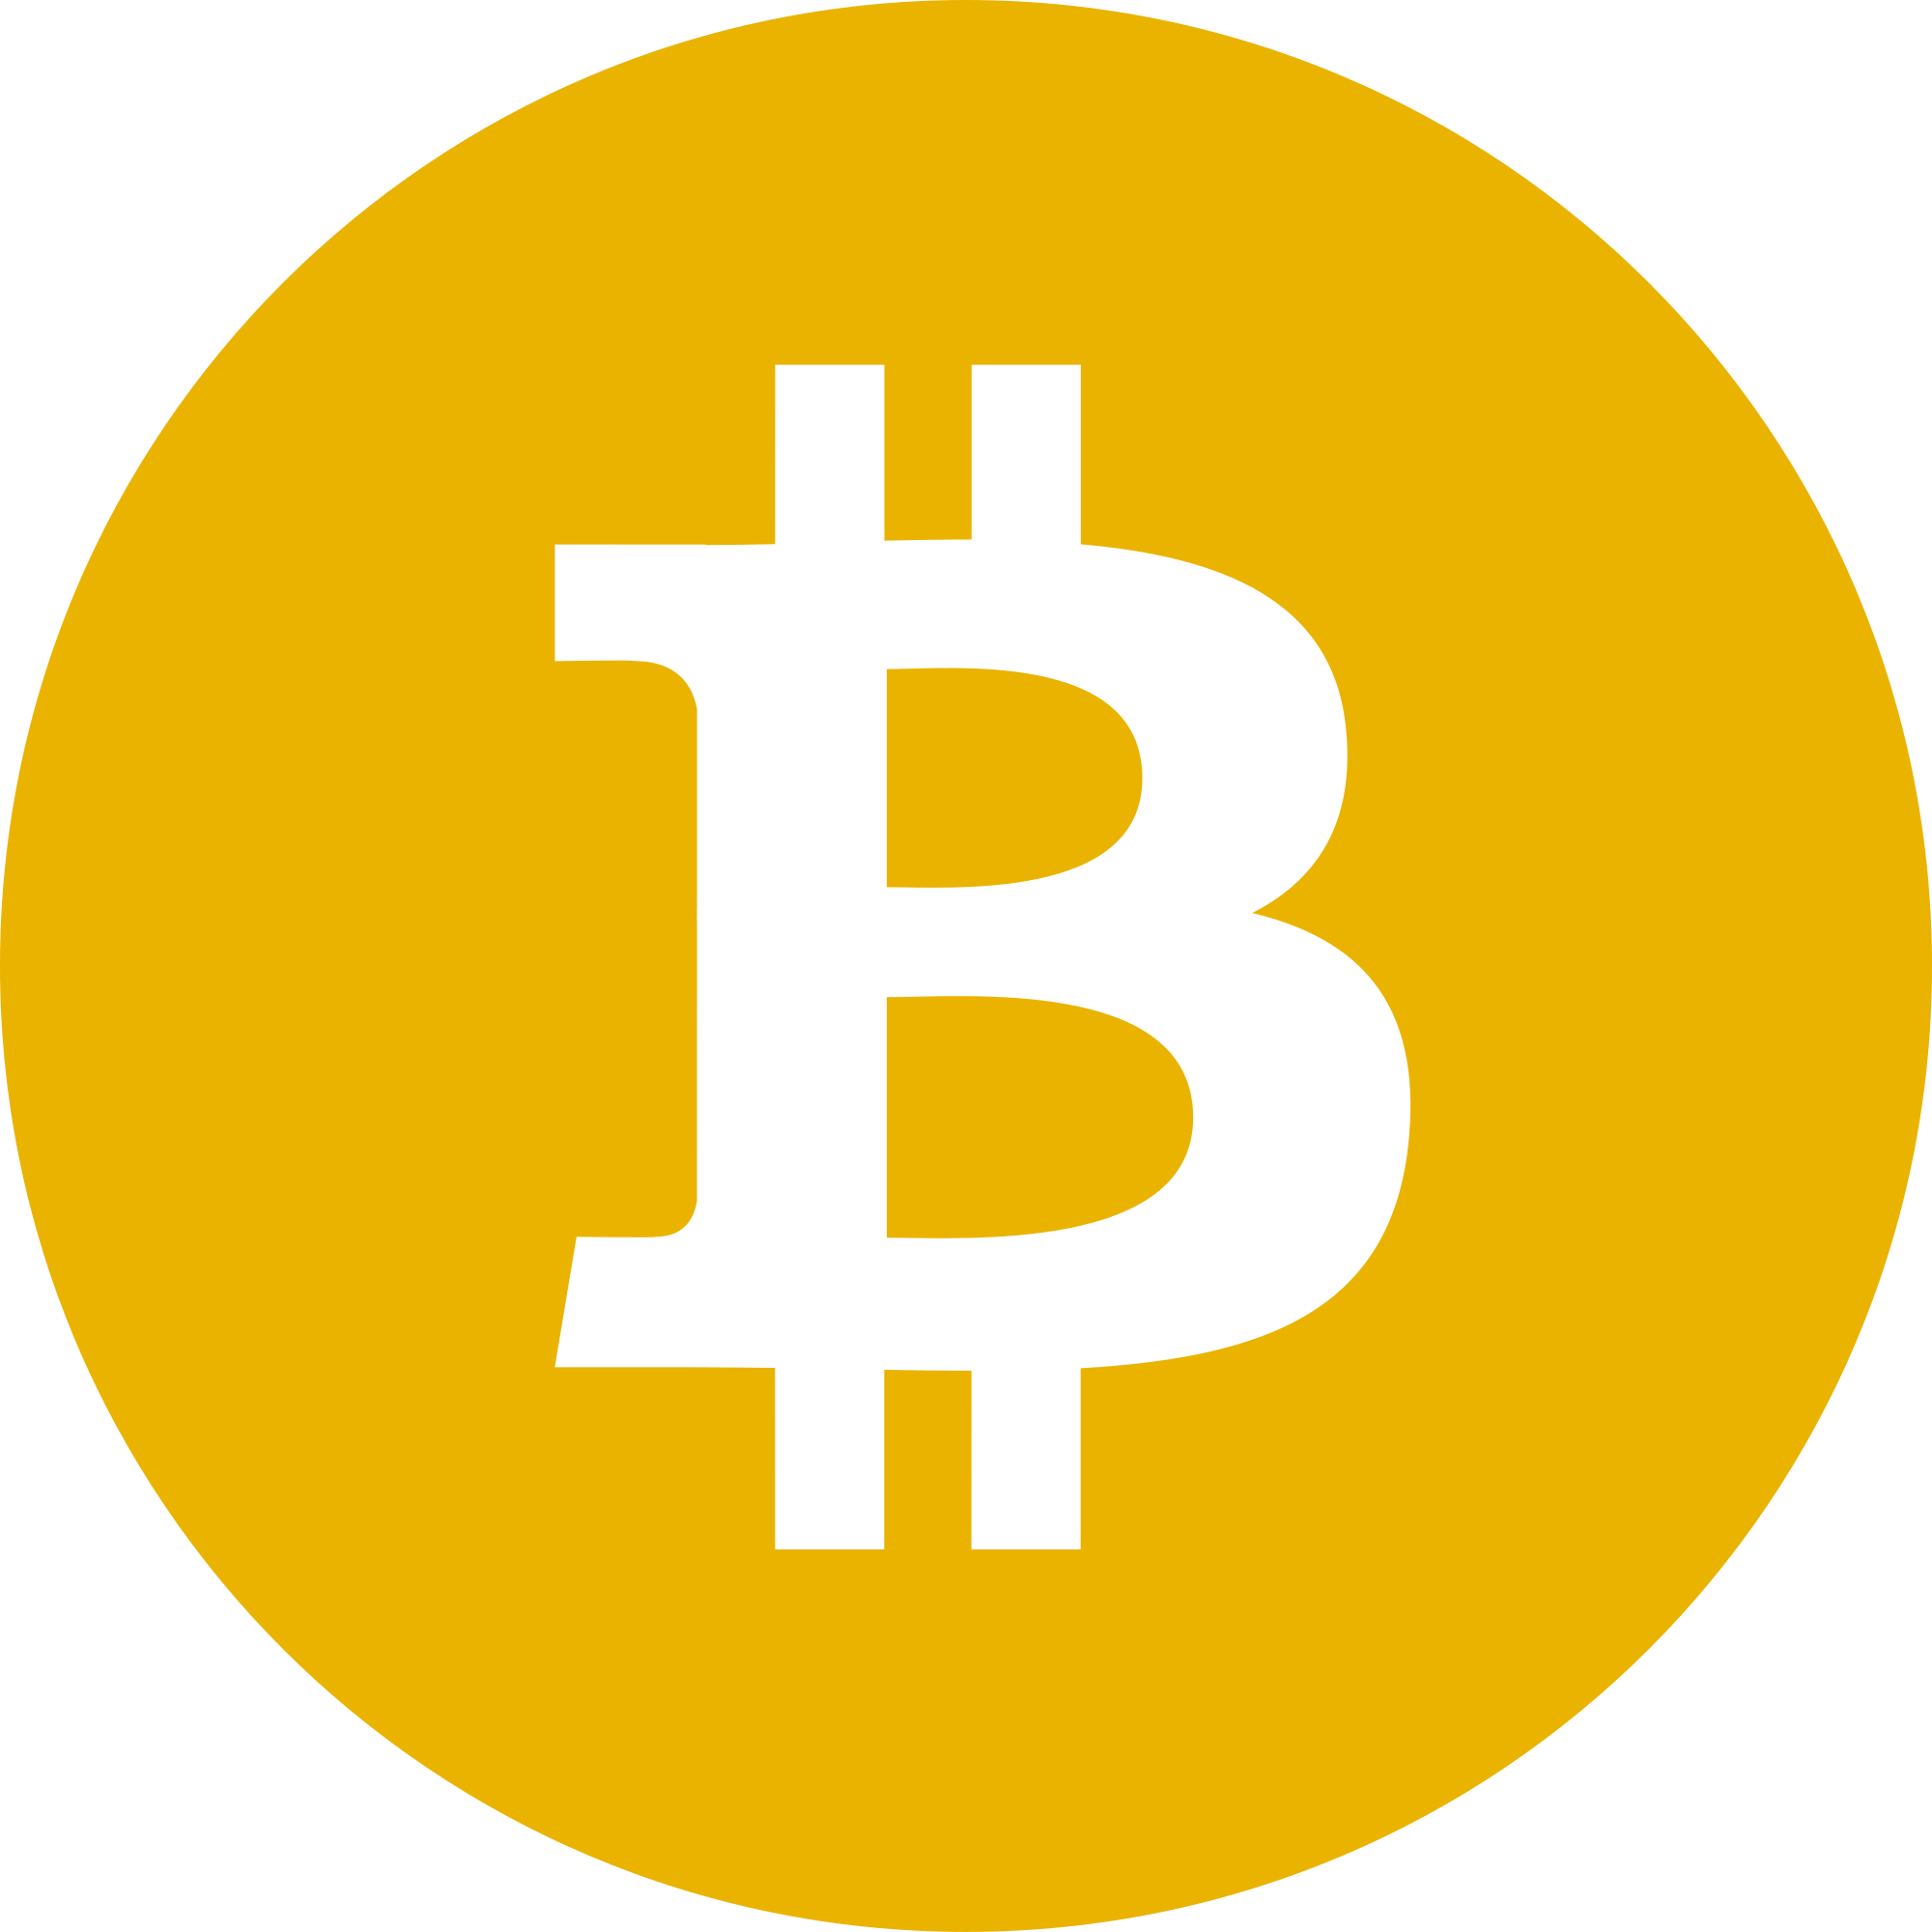 Ledger and Bitcoin SV support | Ledger